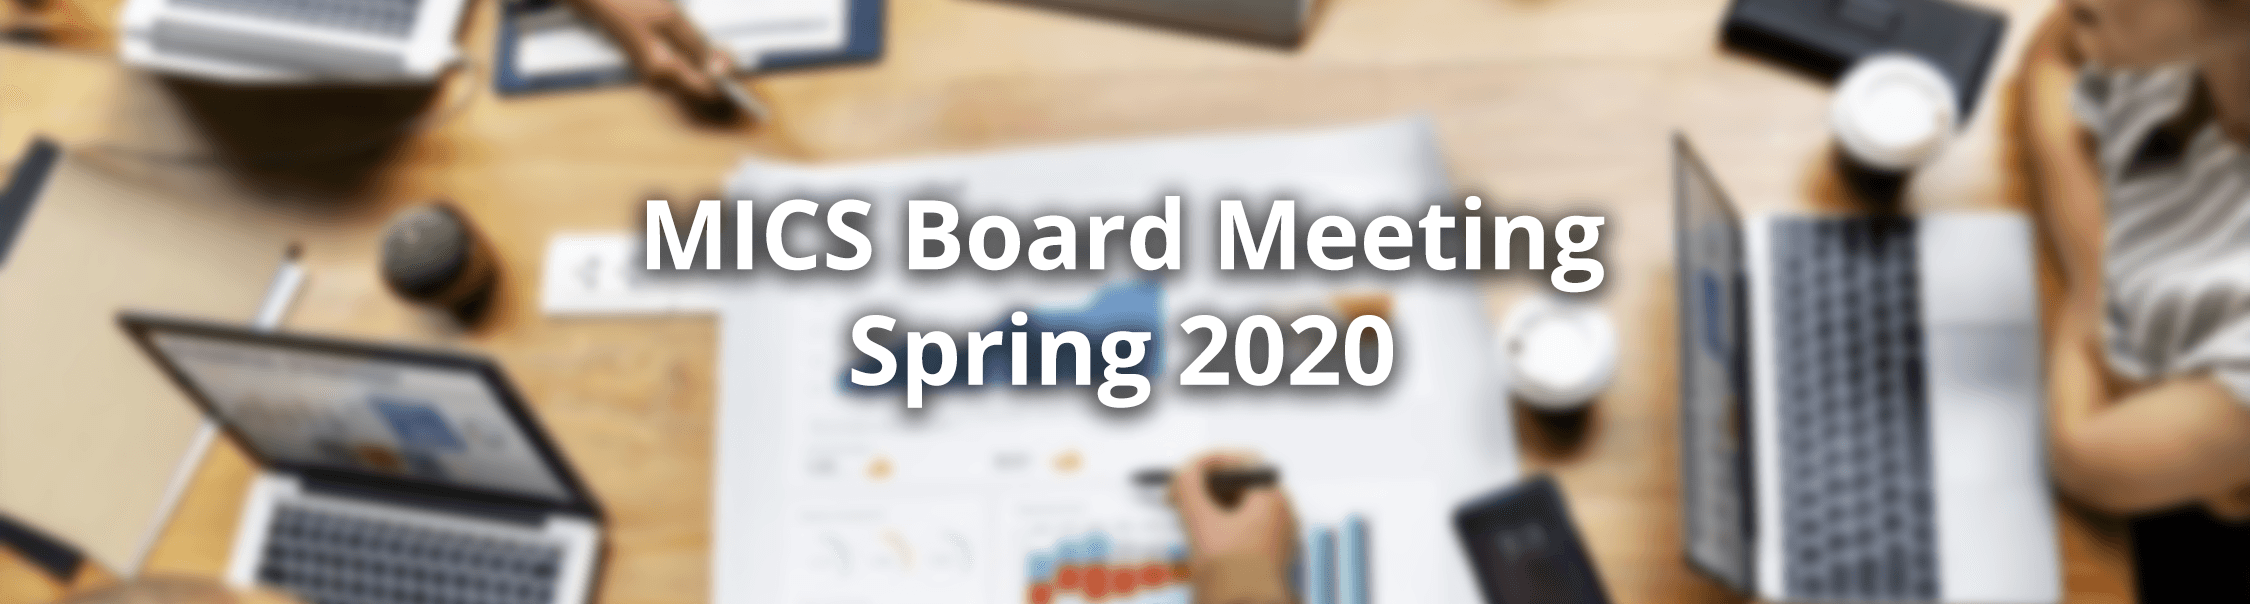 MICS Spring Board Meeting 2020